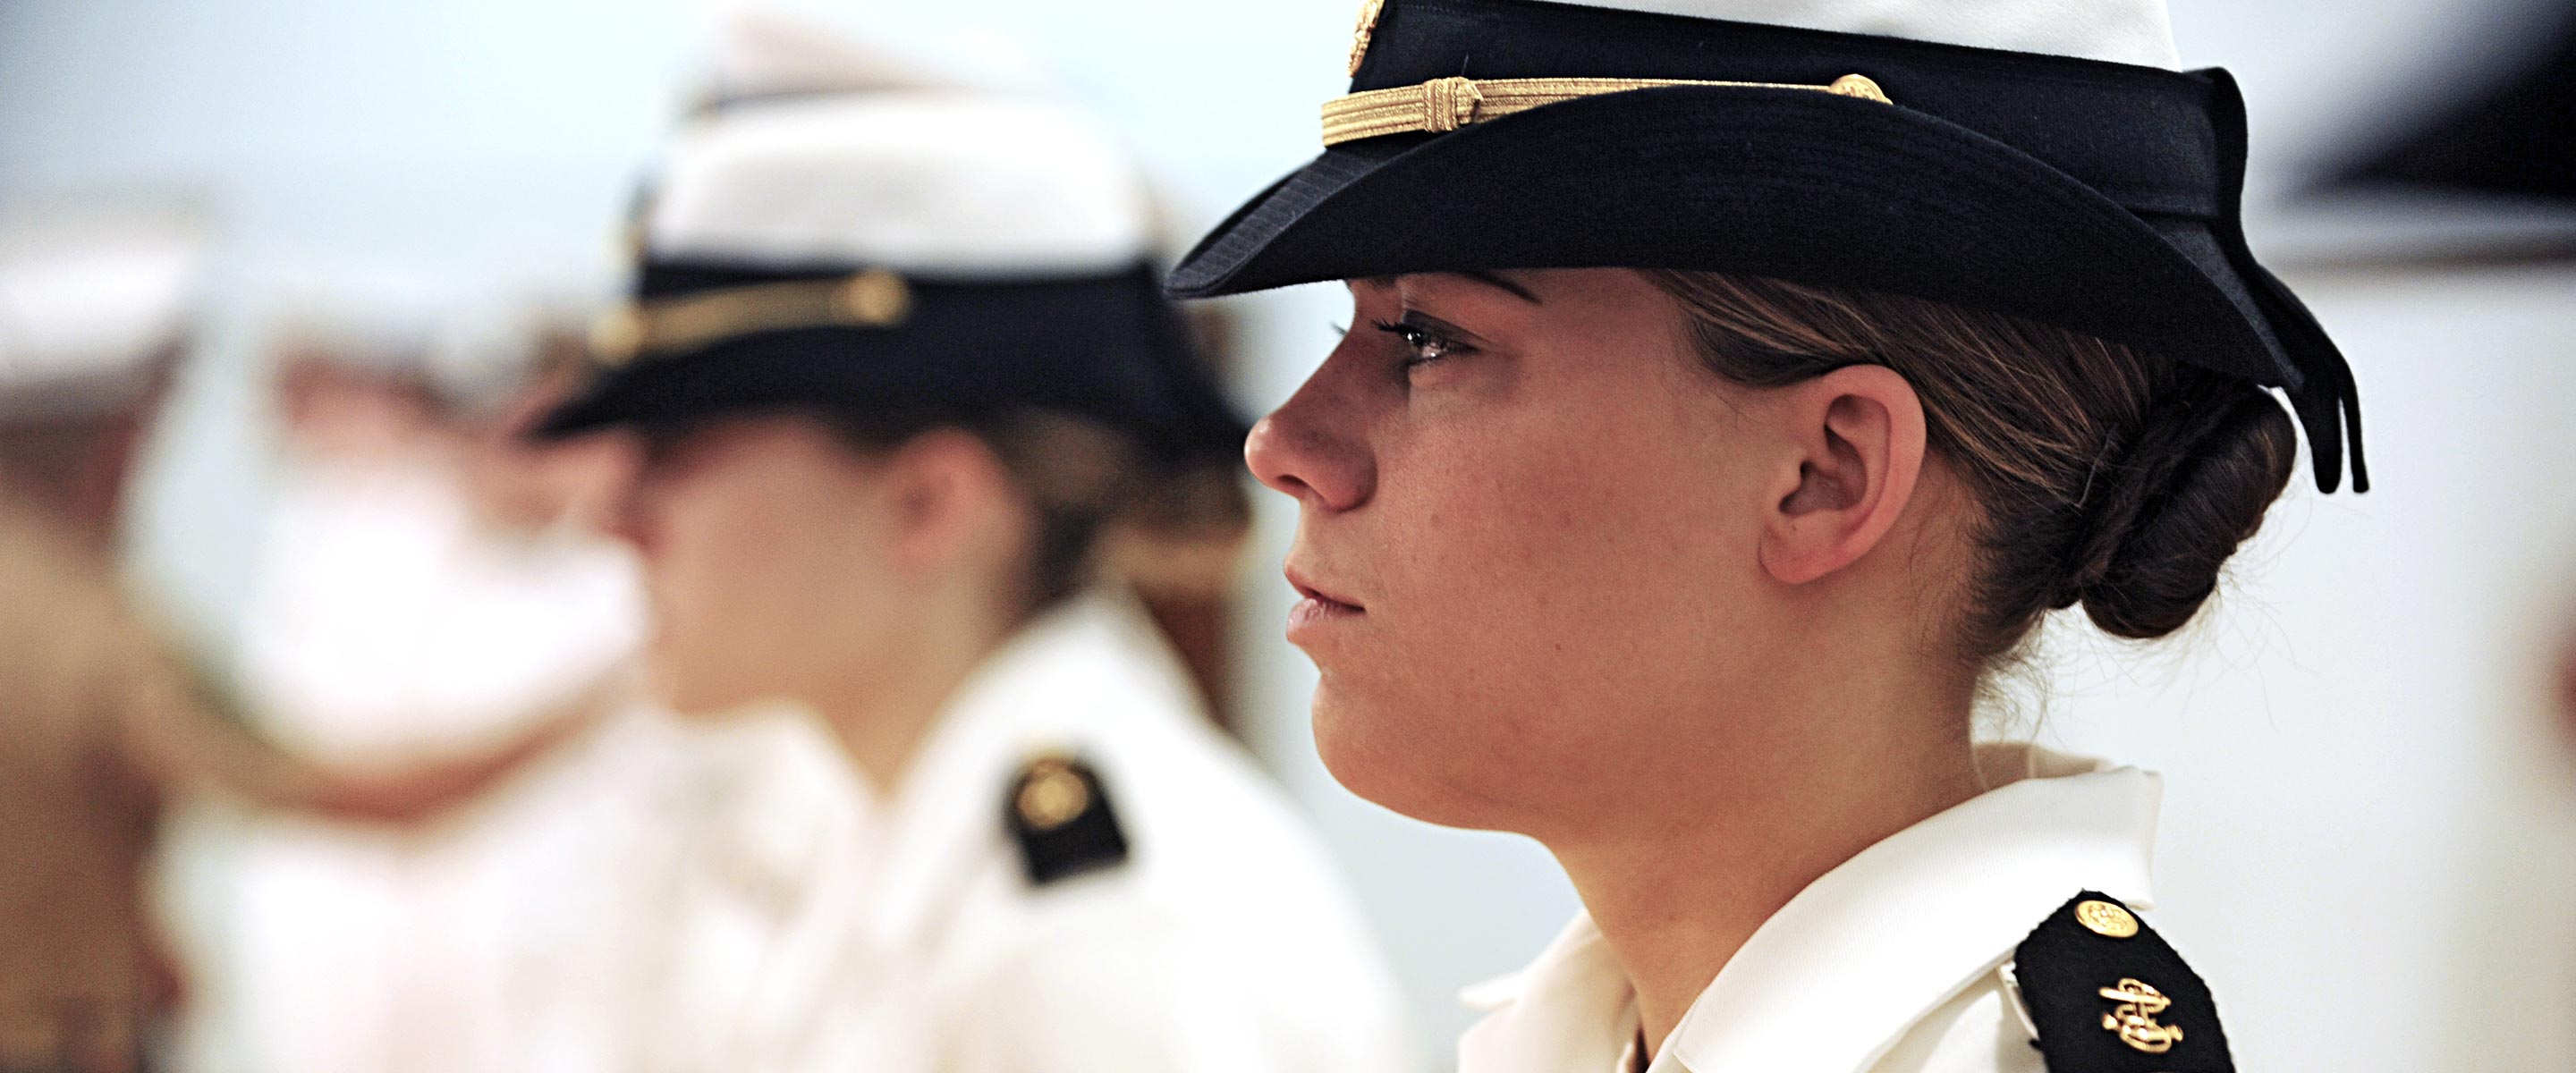 Navy officer  in full uniform during a formal ceremony